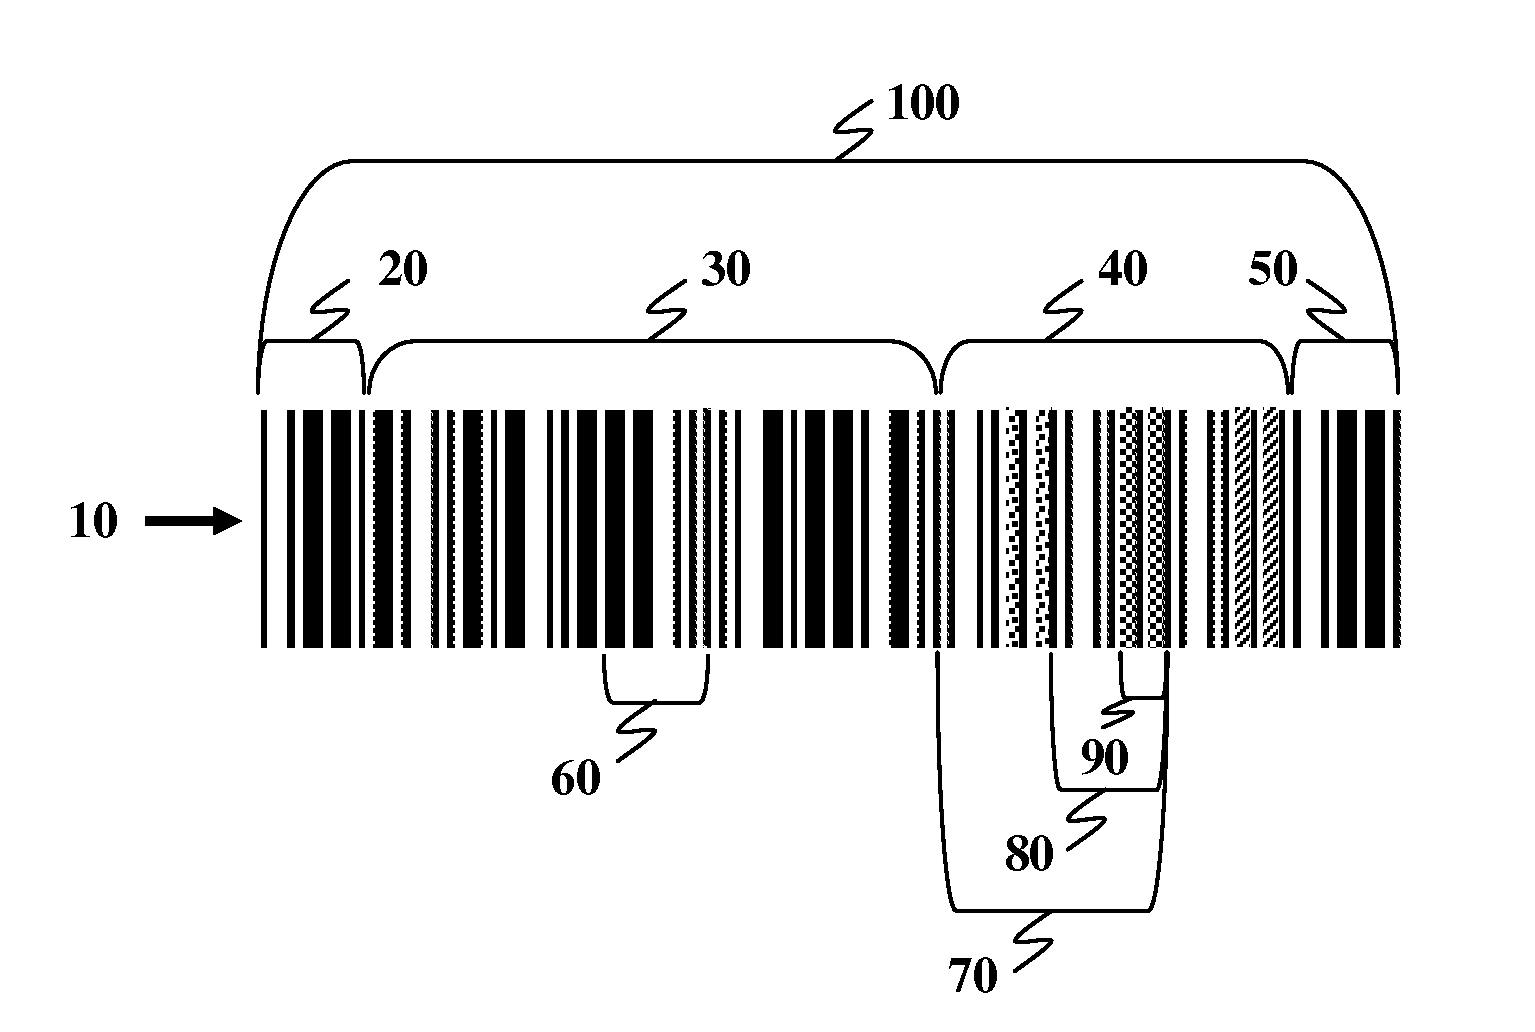 Sensor-embedded barcodes